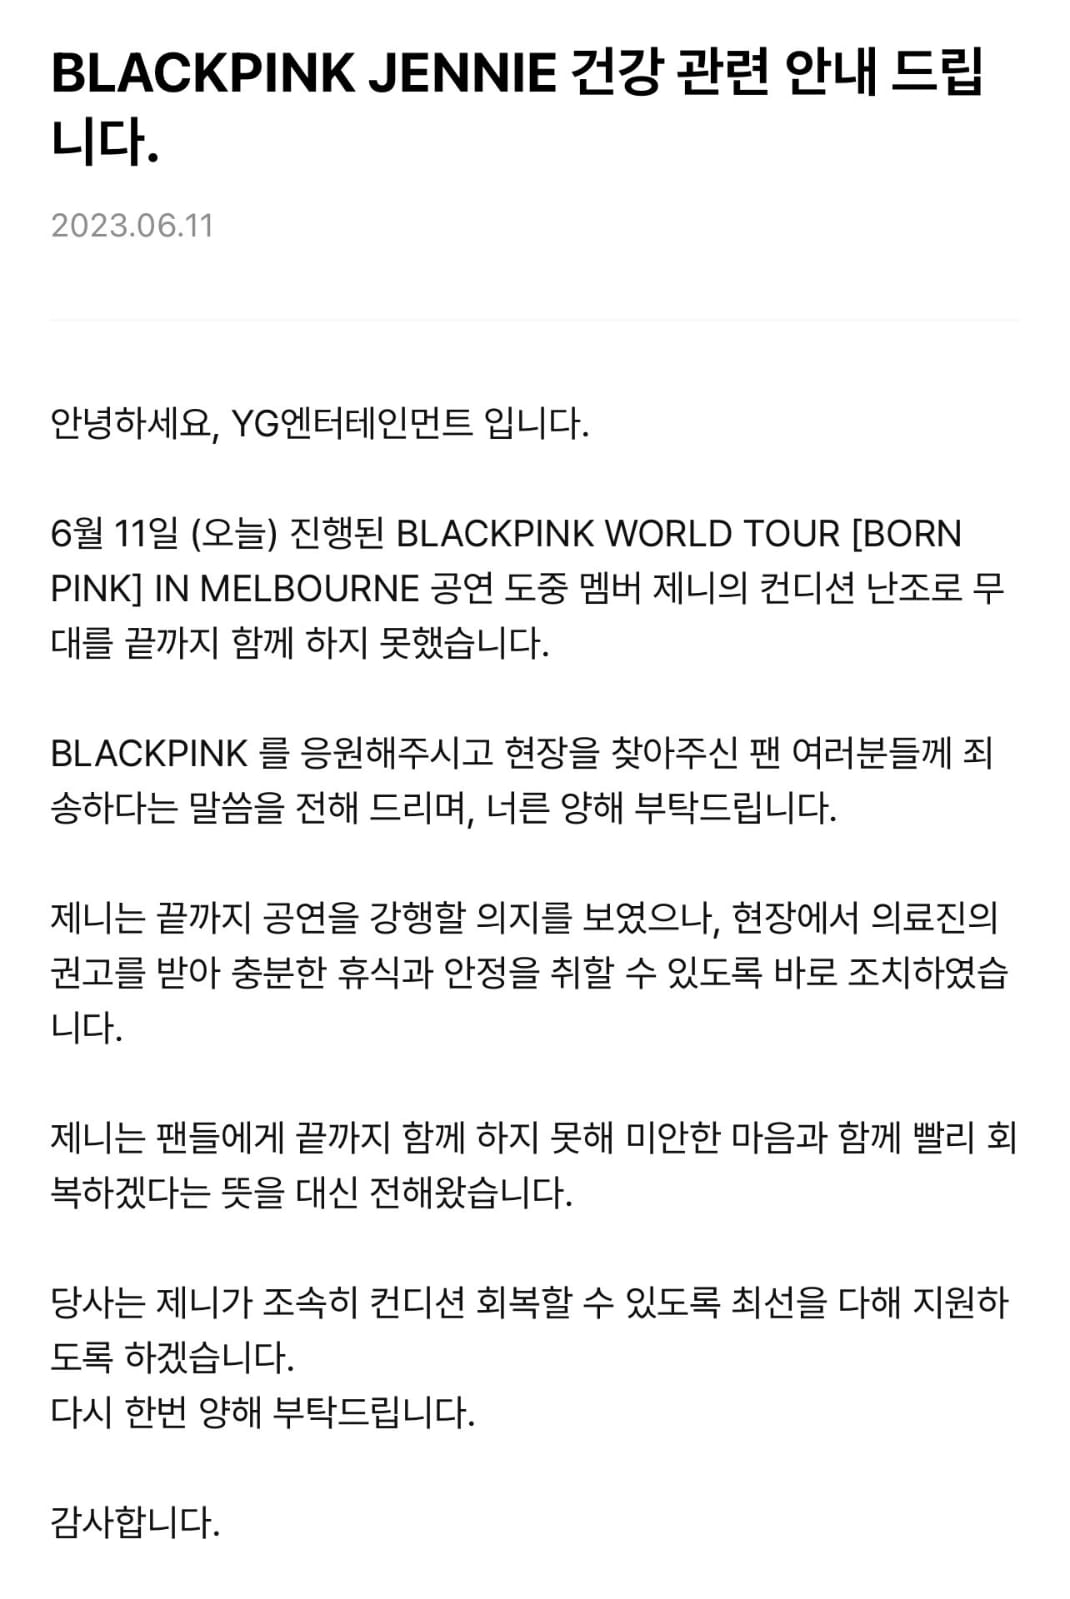 YG Entertainment JENNIE BLACKPINK Press Release